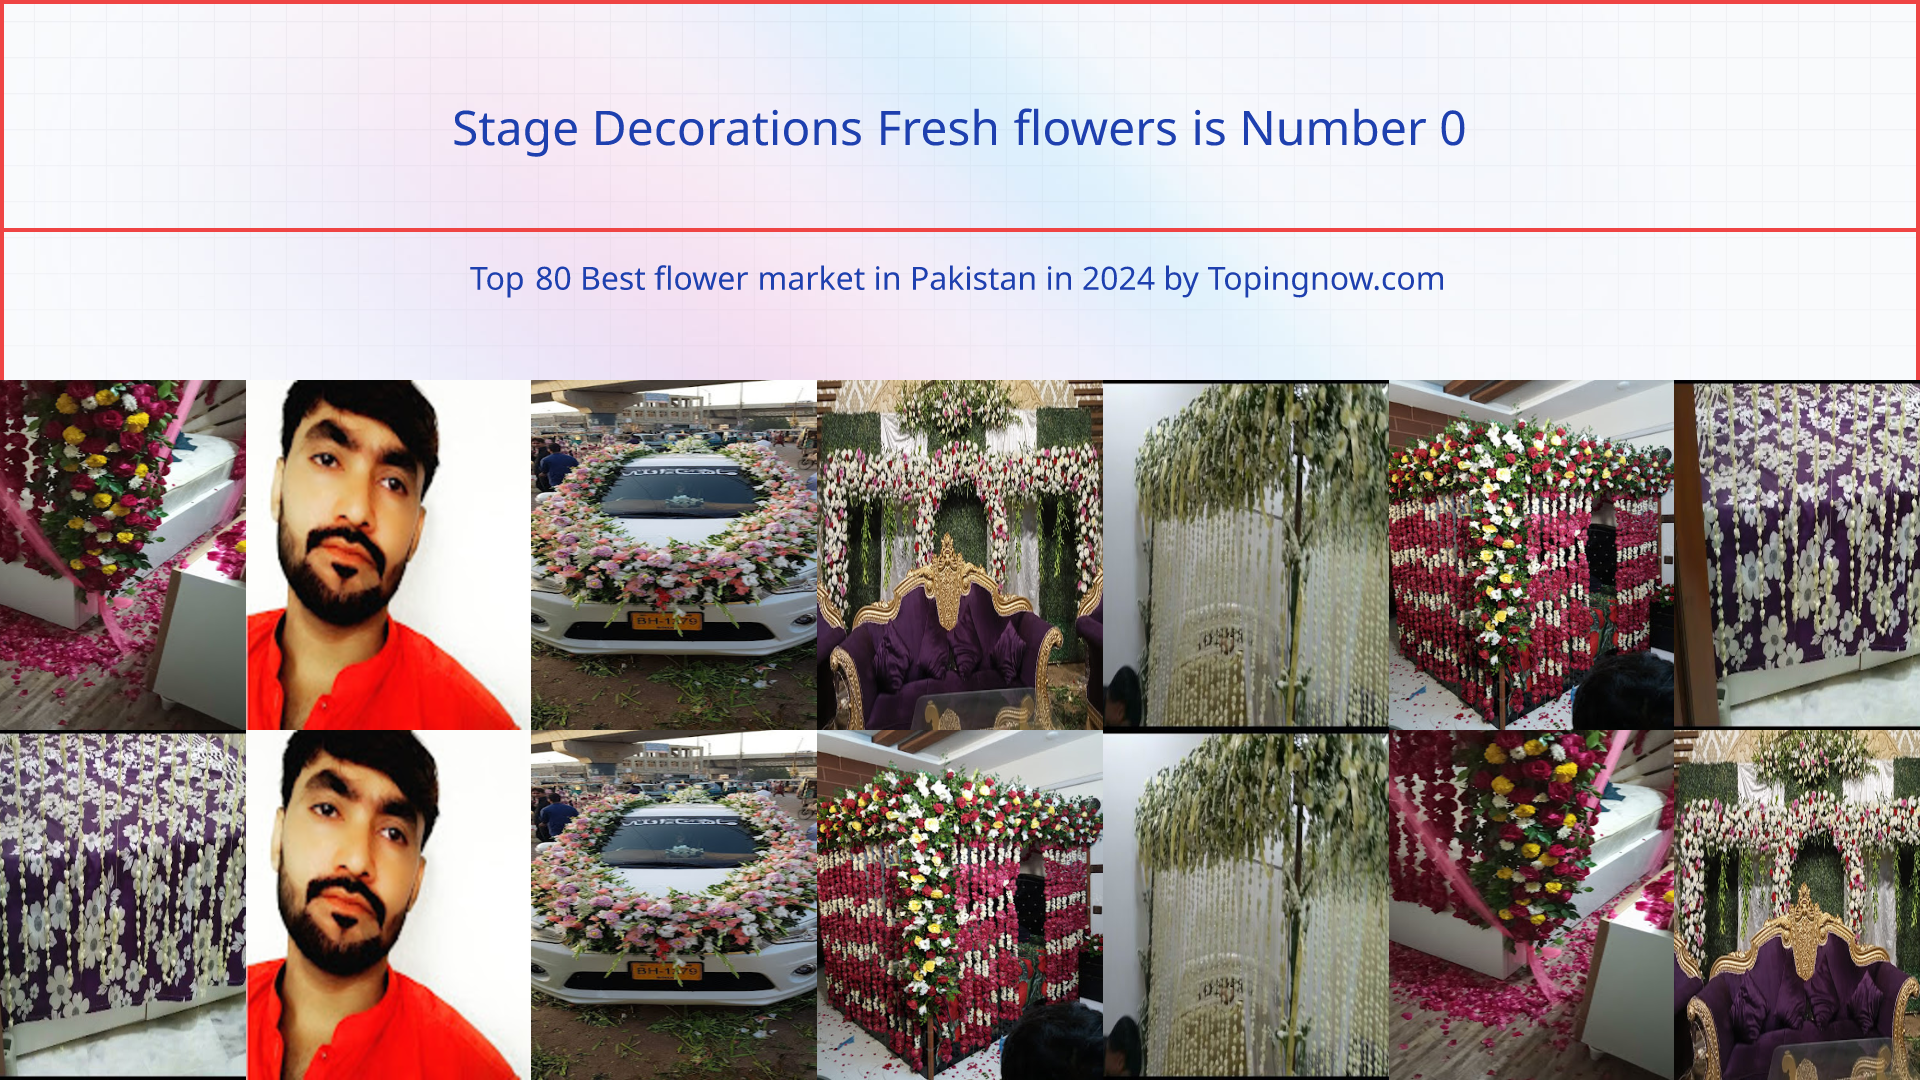 Stage Decorations Fresh flowers: Top 80 Best flower market in Pakistan in 2024